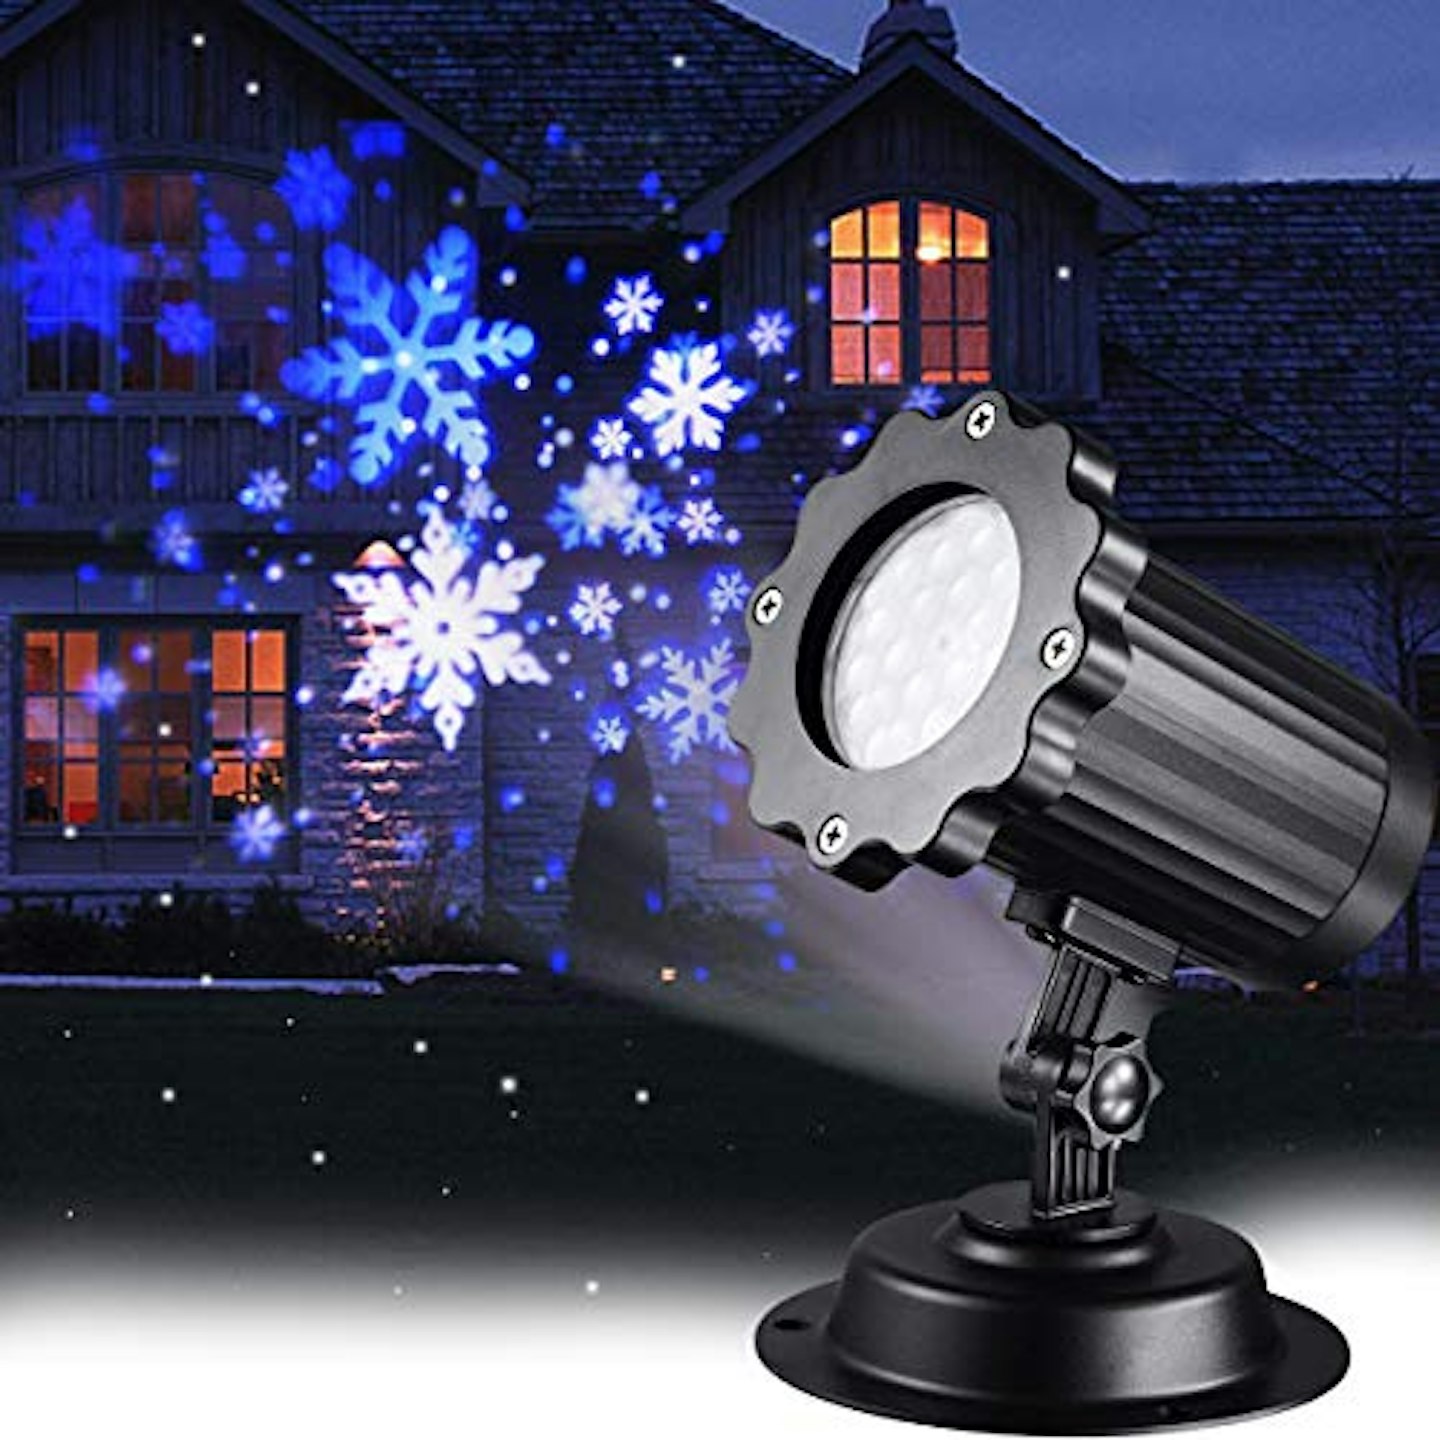 Snowfall LED Light Projector